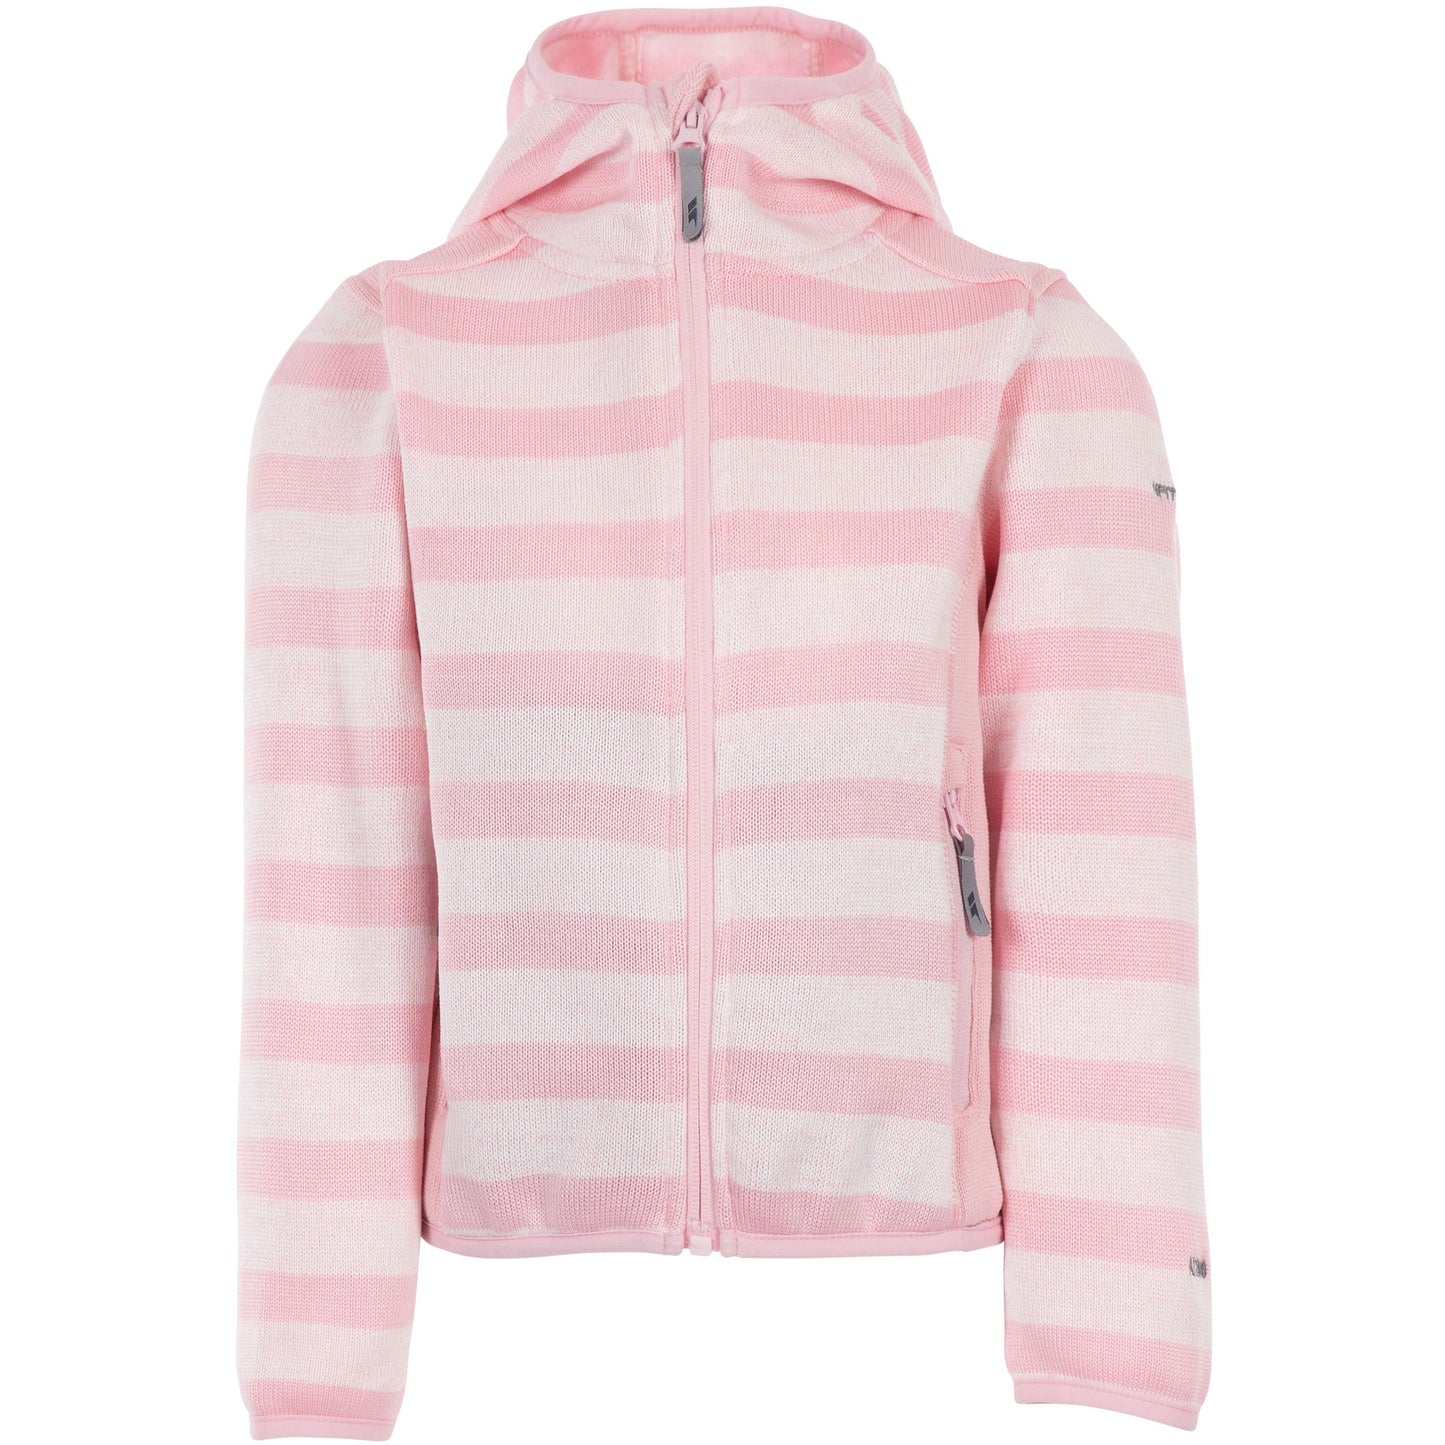 Conjure Girls' Fleece Hoodie in Pale Pink Stripe